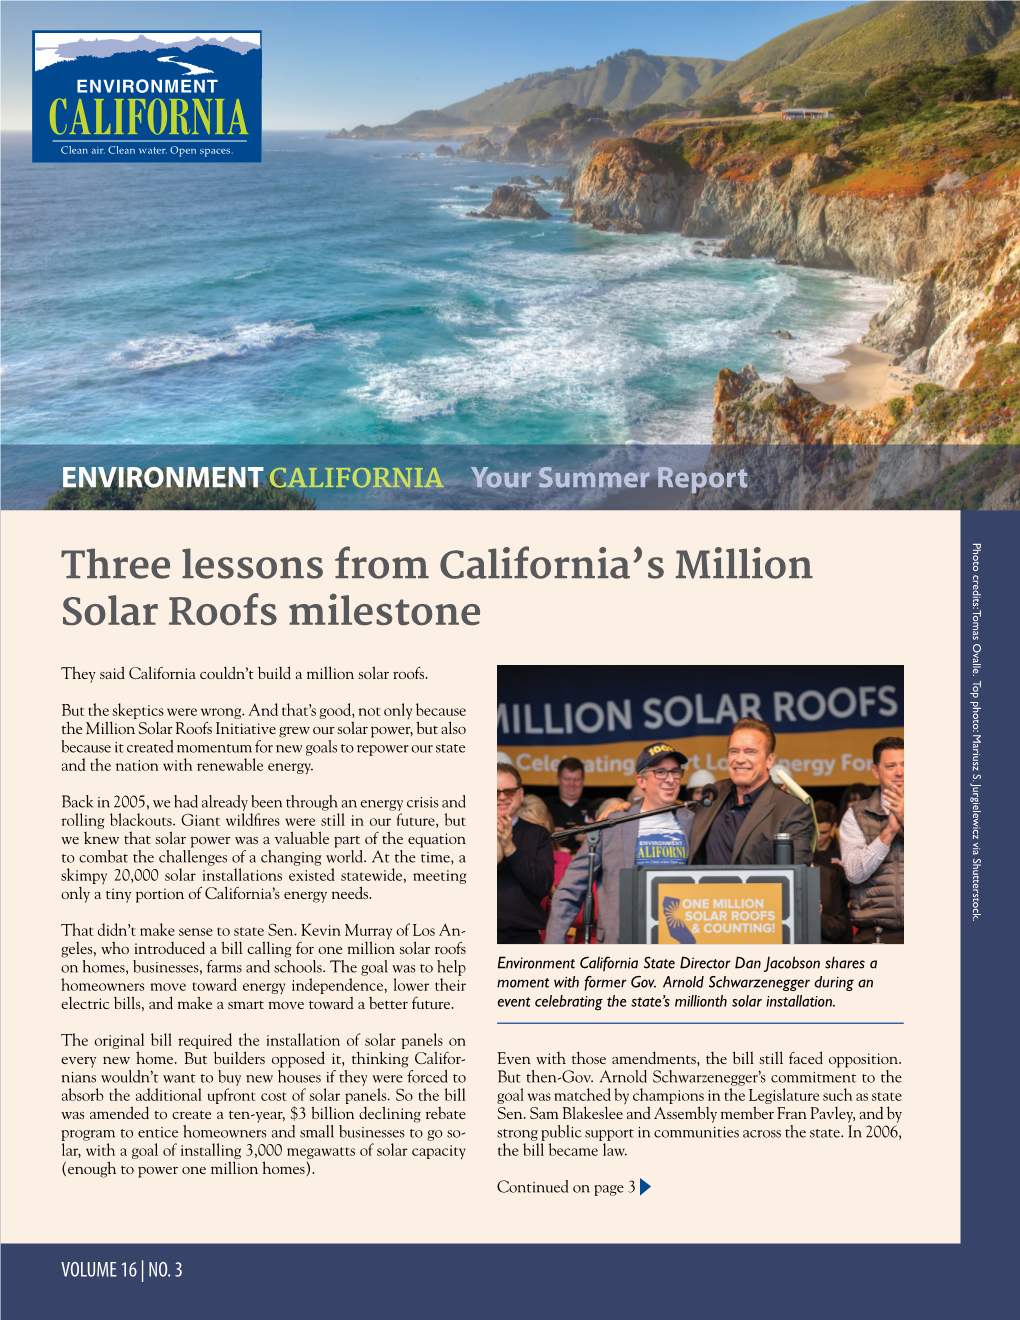 Three Lessons from California's Million Solar Roofs Milestone